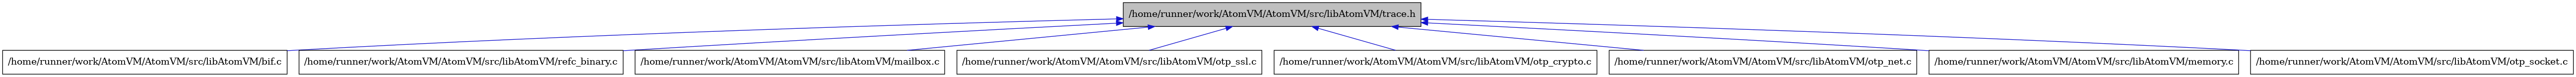 digraph {
    graph [bgcolor="#00000000"]
    node [shape=rectangle style=filled fillcolor="#FFFFFF" font=Helvetica padding=2]
    edge [color="#1414CE"]
    "2" [label="/home/runner/work/AtomVM/AtomVM/src/libAtomVM/bif.c" tooltip="/home/runner/work/AtomVM/AtomVM/src/libAtomVM/bif.c"]
    "1" [label="/home/runner/work/AtomVM/AtomVM/src/libAtomVM/trace.h" tooltip="/home/runner/work/AtomVM/AtomVM/src/libAtomVM/trace.h" fillcolor="#BFBFBF"]
    "9" [label="/home/runner/work/AtomVM/AtomVM/src/libAtomVM/refc_binary.c" tooltip="/home/runner/work/AtomVM/AtomVM/src/libAtomVM/refc_binary.c"]
    "3" [label="/home/runner/work/AtomVM/AtomVM/src/libAtomVM/mailbox.c" tooltip="/home/runner/work/AtomVM/AtomVM/src/libAtomVM/mailbox.c"]
    "8" [label="/home/runner/work/AtomVM/AtomVM/src/libAtomVM/otp_ssl.c" tooltip="/home/runner/work/AtomVM/AtomVM/src/libAtomVM/otp_ssl.c"]
    "5" [label="/home/runner/work/AtomVM/AtomVM/src/libAtomVM/otp_crypto.c" tooltip="/home/runner/work/AtomVM/AtomVM/src/libAtomVM/otp_crypto.c"]
    "6" [label="/home/runner/work/AtomVM/AtomVM/src/libAtomVM/otp_net.c" tooltip="/home/runner/work/AtomVM/AtomVM/src/libAtomVM/otp_net.c"]
    "4" [label="/home/runner/work/AtomVM/AtomVM/src/libAtomVM/memory.c" tooltip="/home/runner/work/AtomVM/AtomVM/src/libAtomVM/memory.c"]
    "7" [label="/home/runner/work/AtomVM/AtomVM/src/libAtomVM/otp_socket.c" tooltip="/home/runner/work/AtomVM/AtomVM/src/libAtomVM/otp_socket.c"]
    "1" -> "2" [dir=back tooltip="include"]
    "1" -> "3" [dir=back tooltip="include"]
    "1" -> "4" [dir=back tooltip="include"]
    "1" -> "5" [dir=back tooltip="include"]
    "1" -> "6" [dir=back tooltip="include"]
    "1" -> "7" [dir=back tooltip="include"]
    "1" -> "8" [dir=back tooltip="include"]
    "1" -> "9" [dir=back tooltip="include"]
}